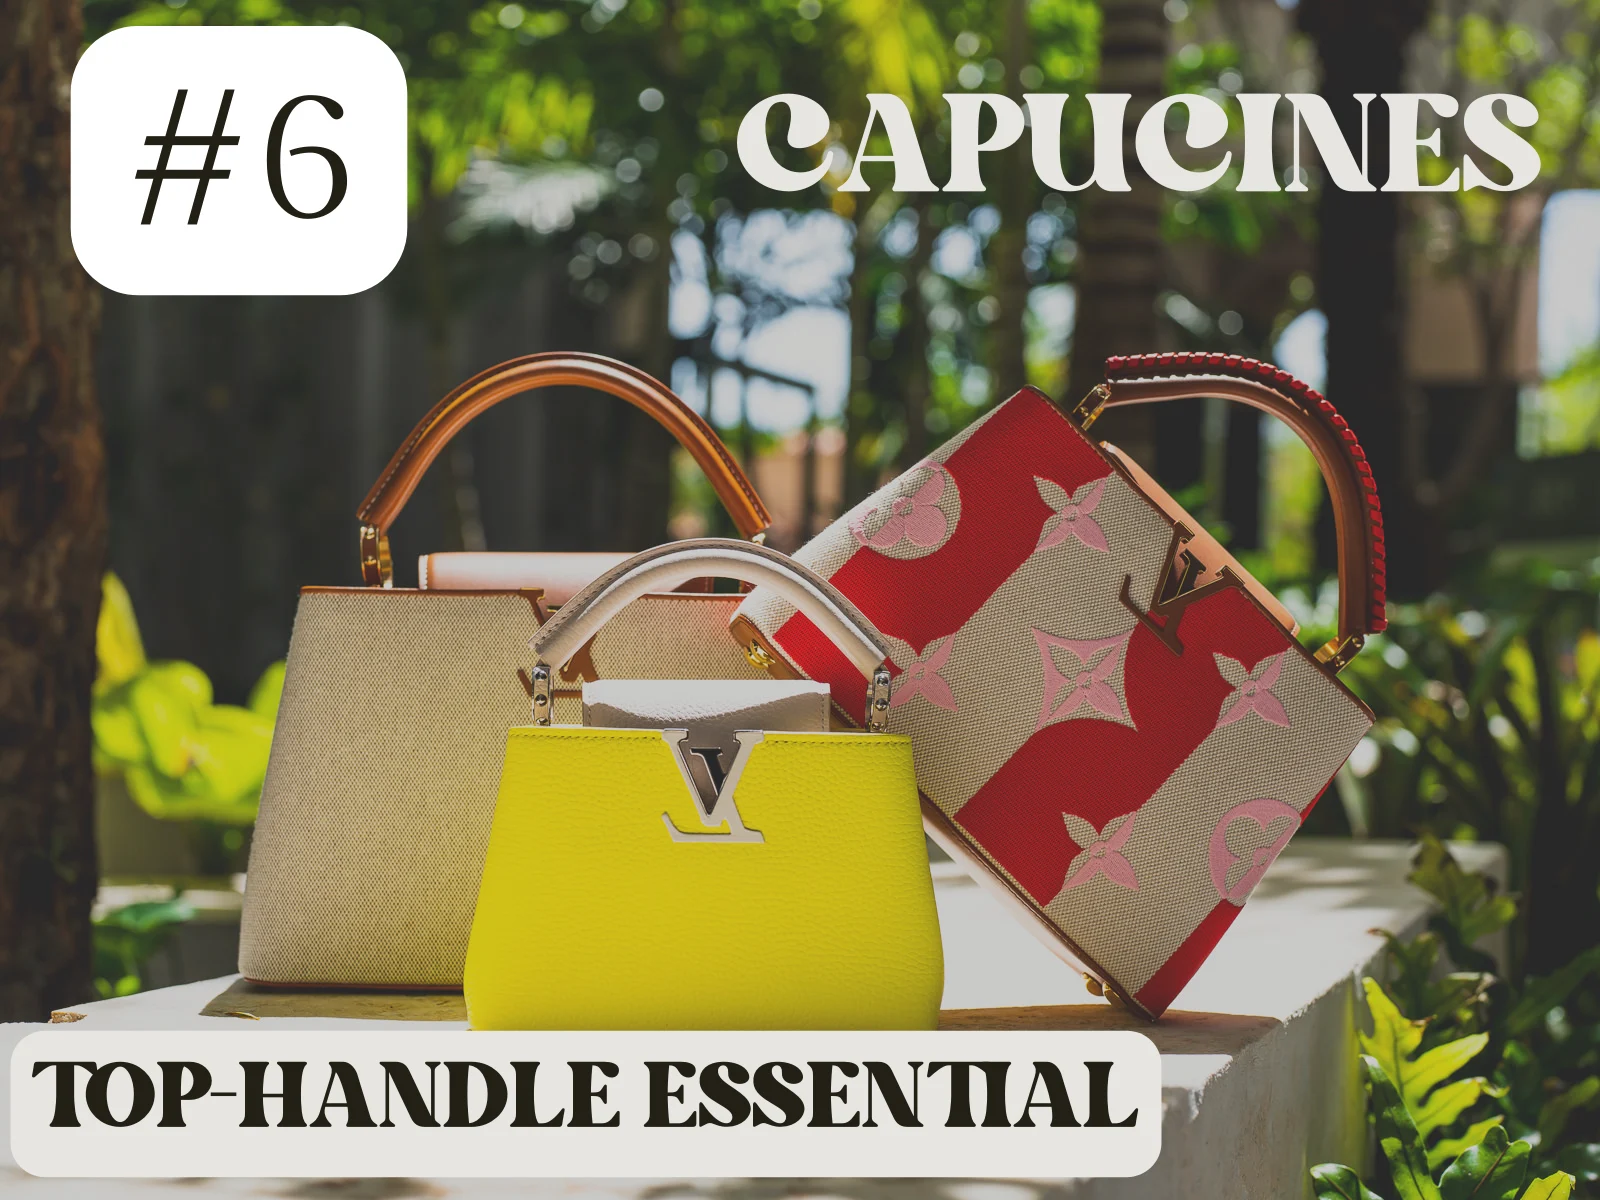 Louis Vuitton Capucines assortment, Top-handle essential